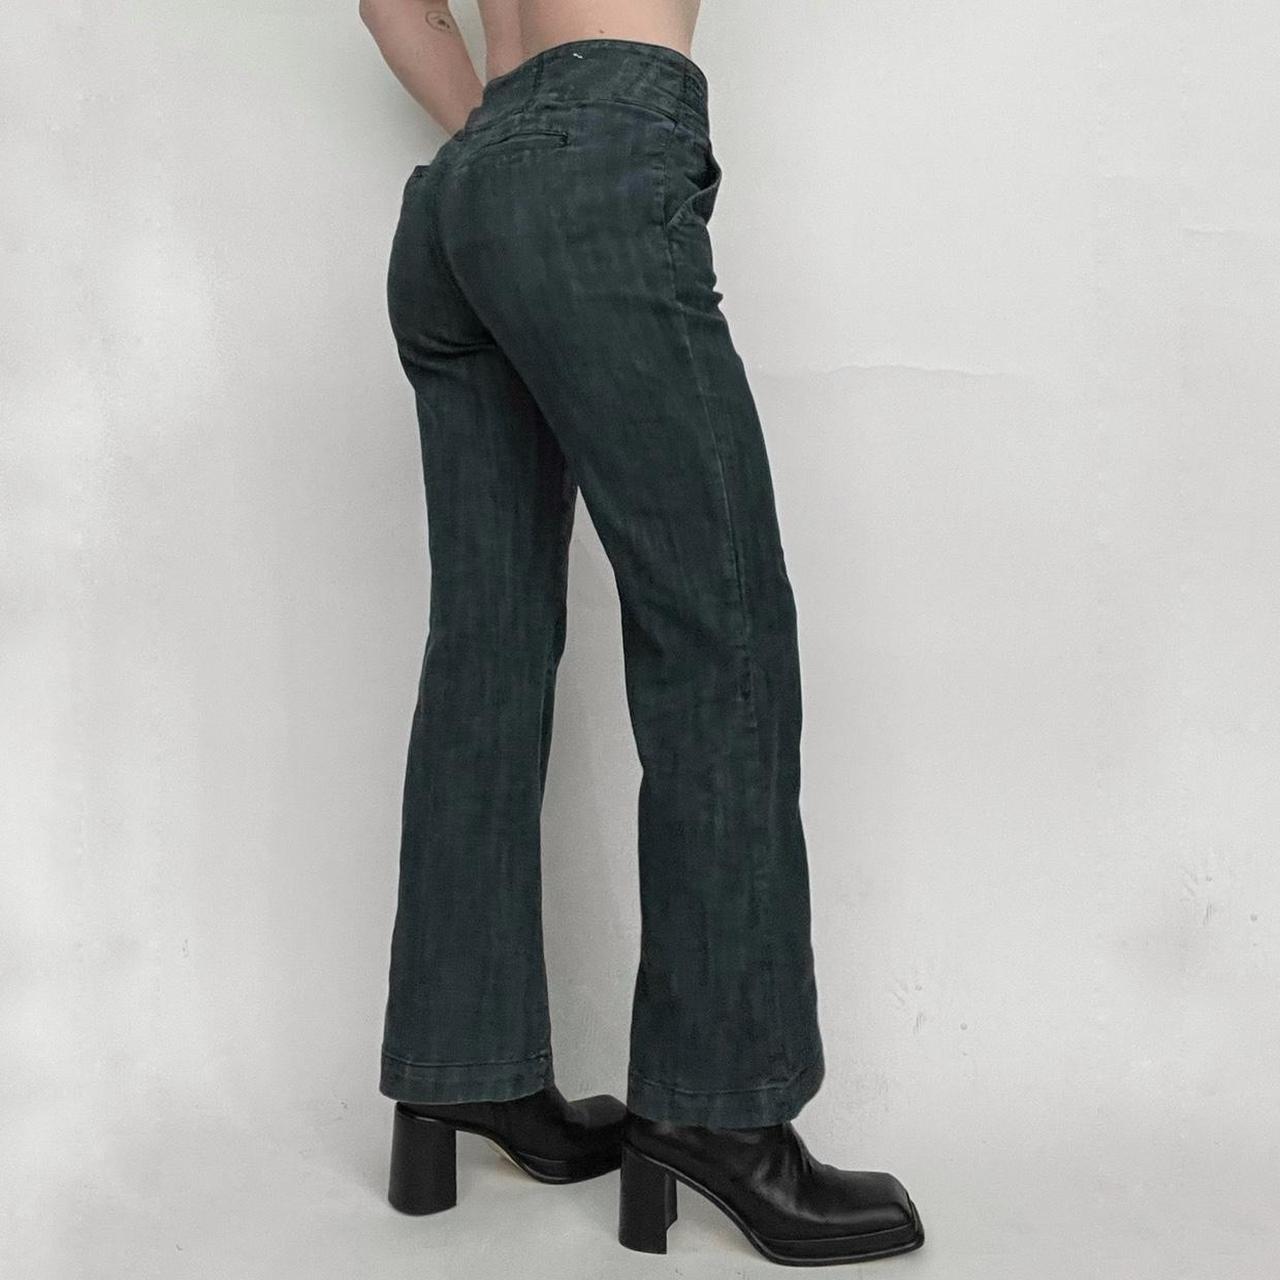 vintage dark wash flare jeans 🪩 OUT OF TOWN -... - Depop